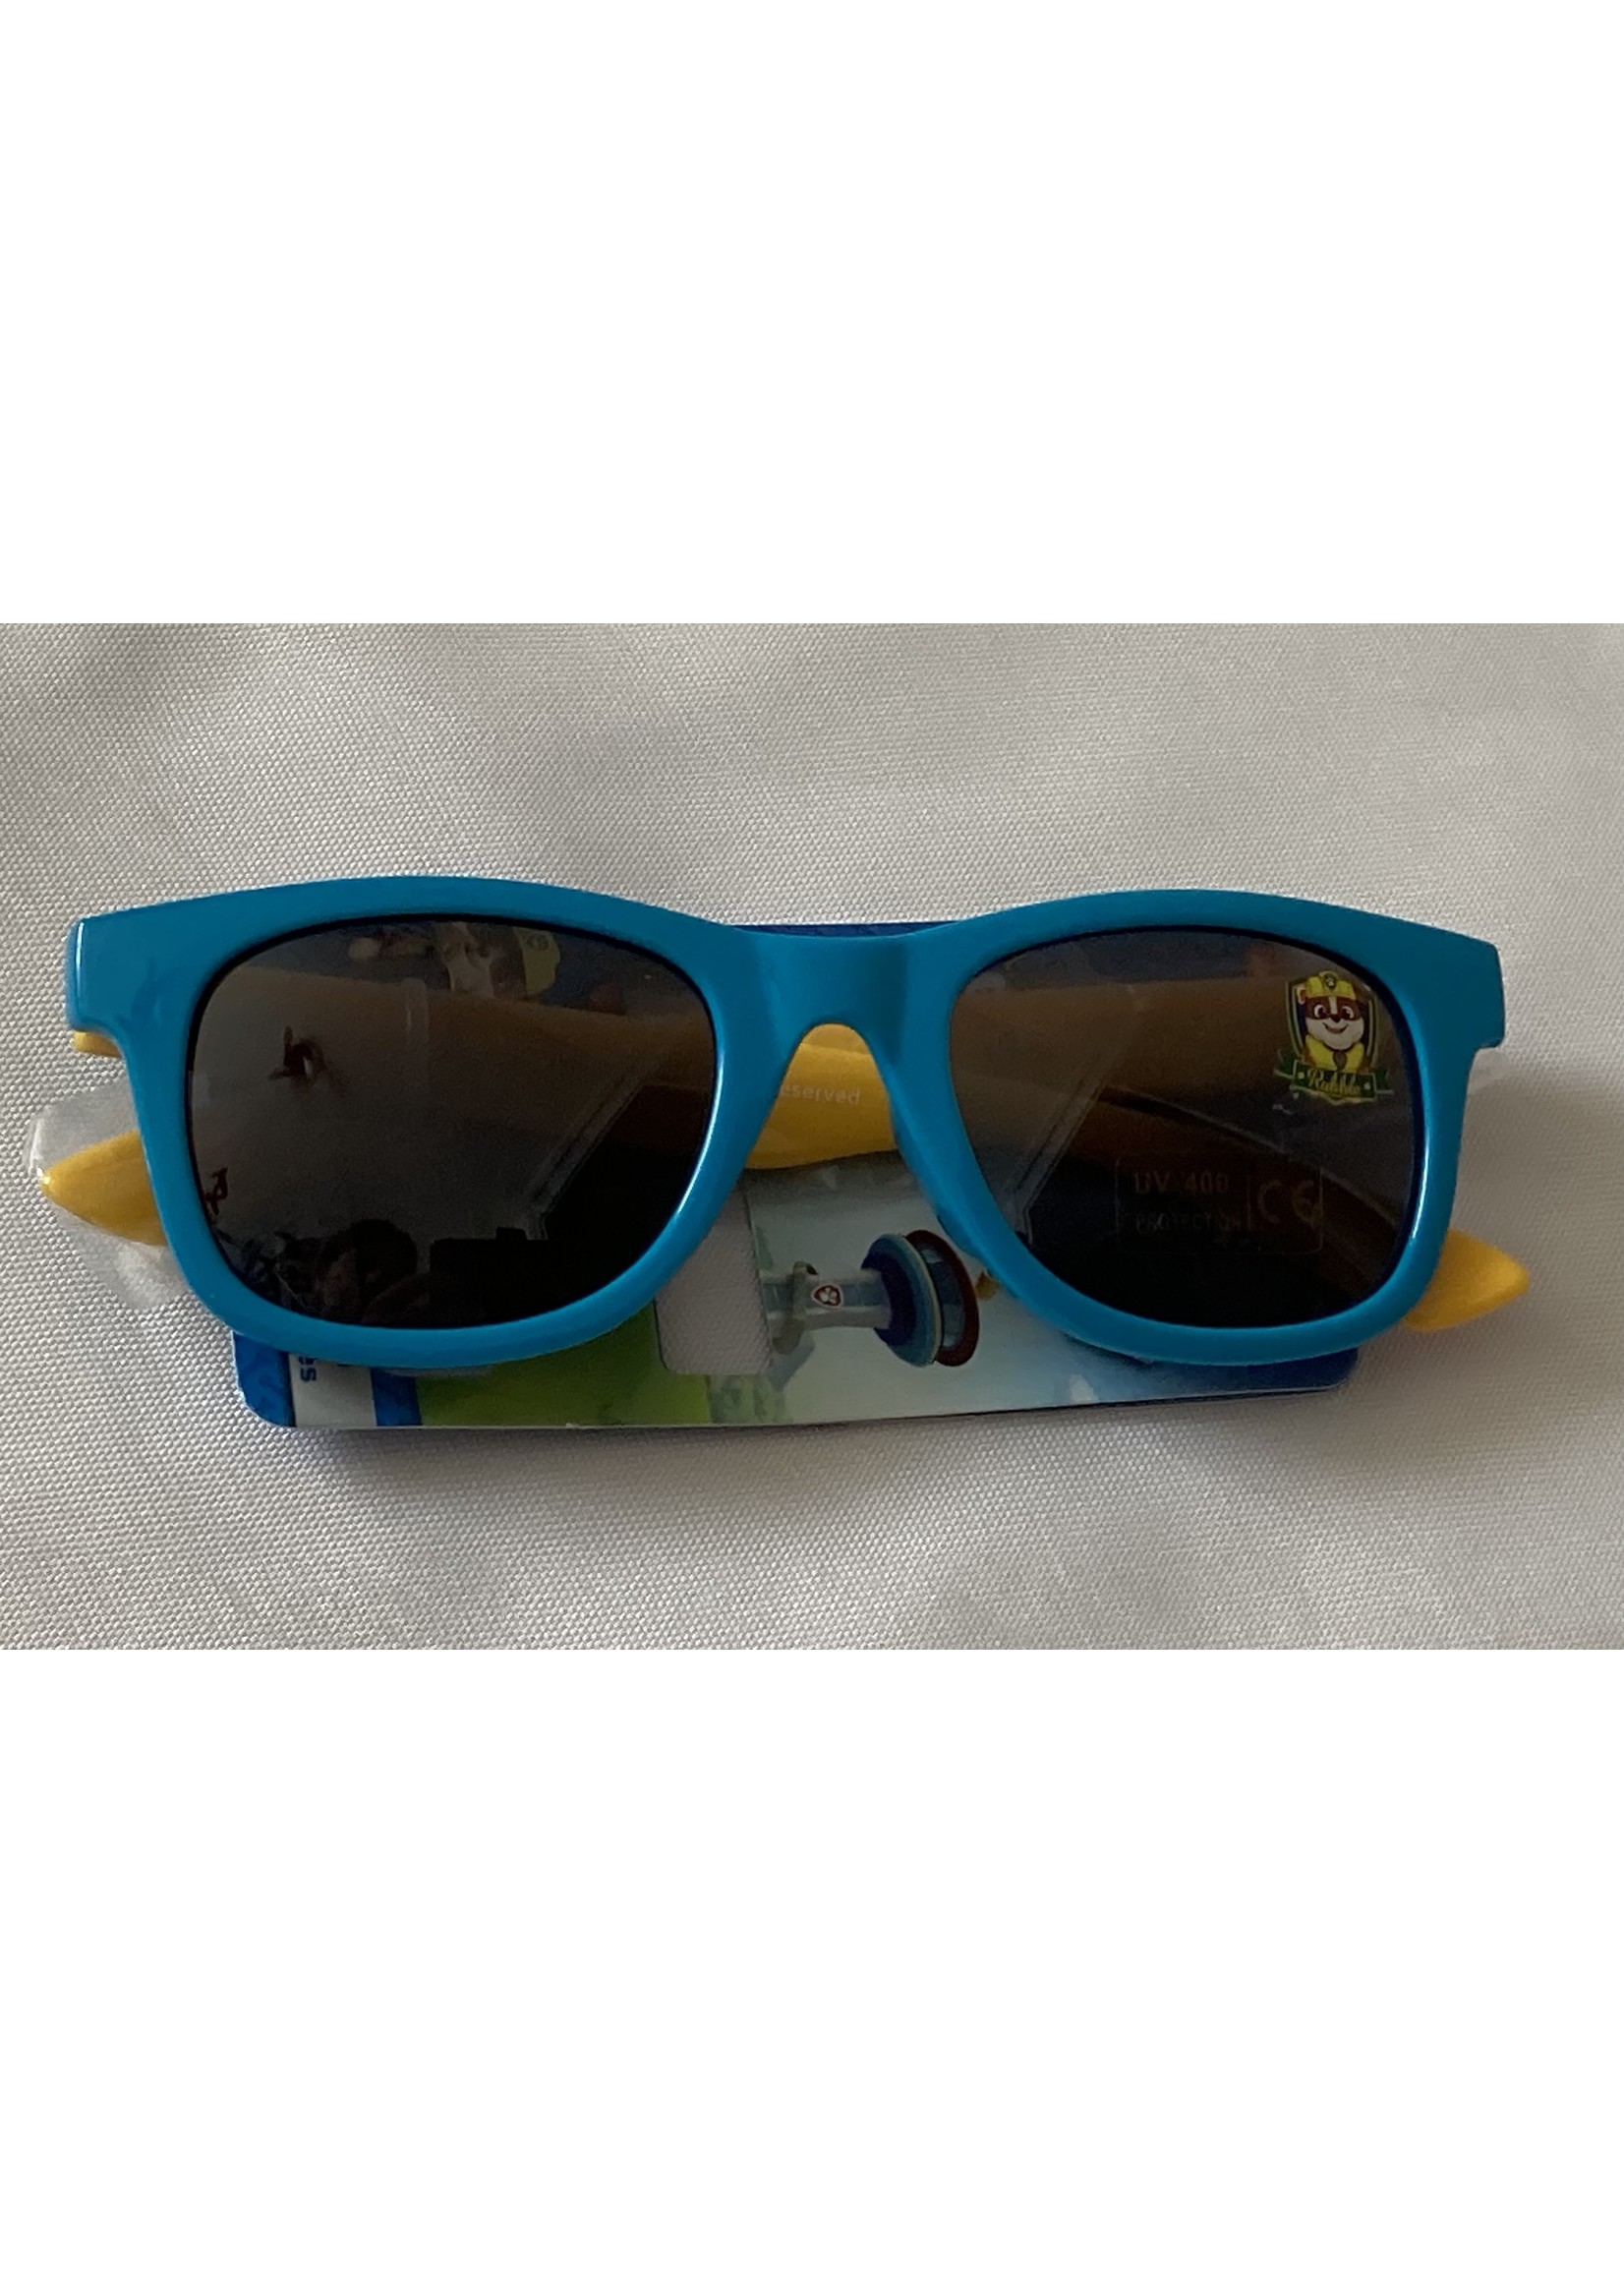 Nickelodeon Paw Patrol sunglasses from Nickelodeon blue